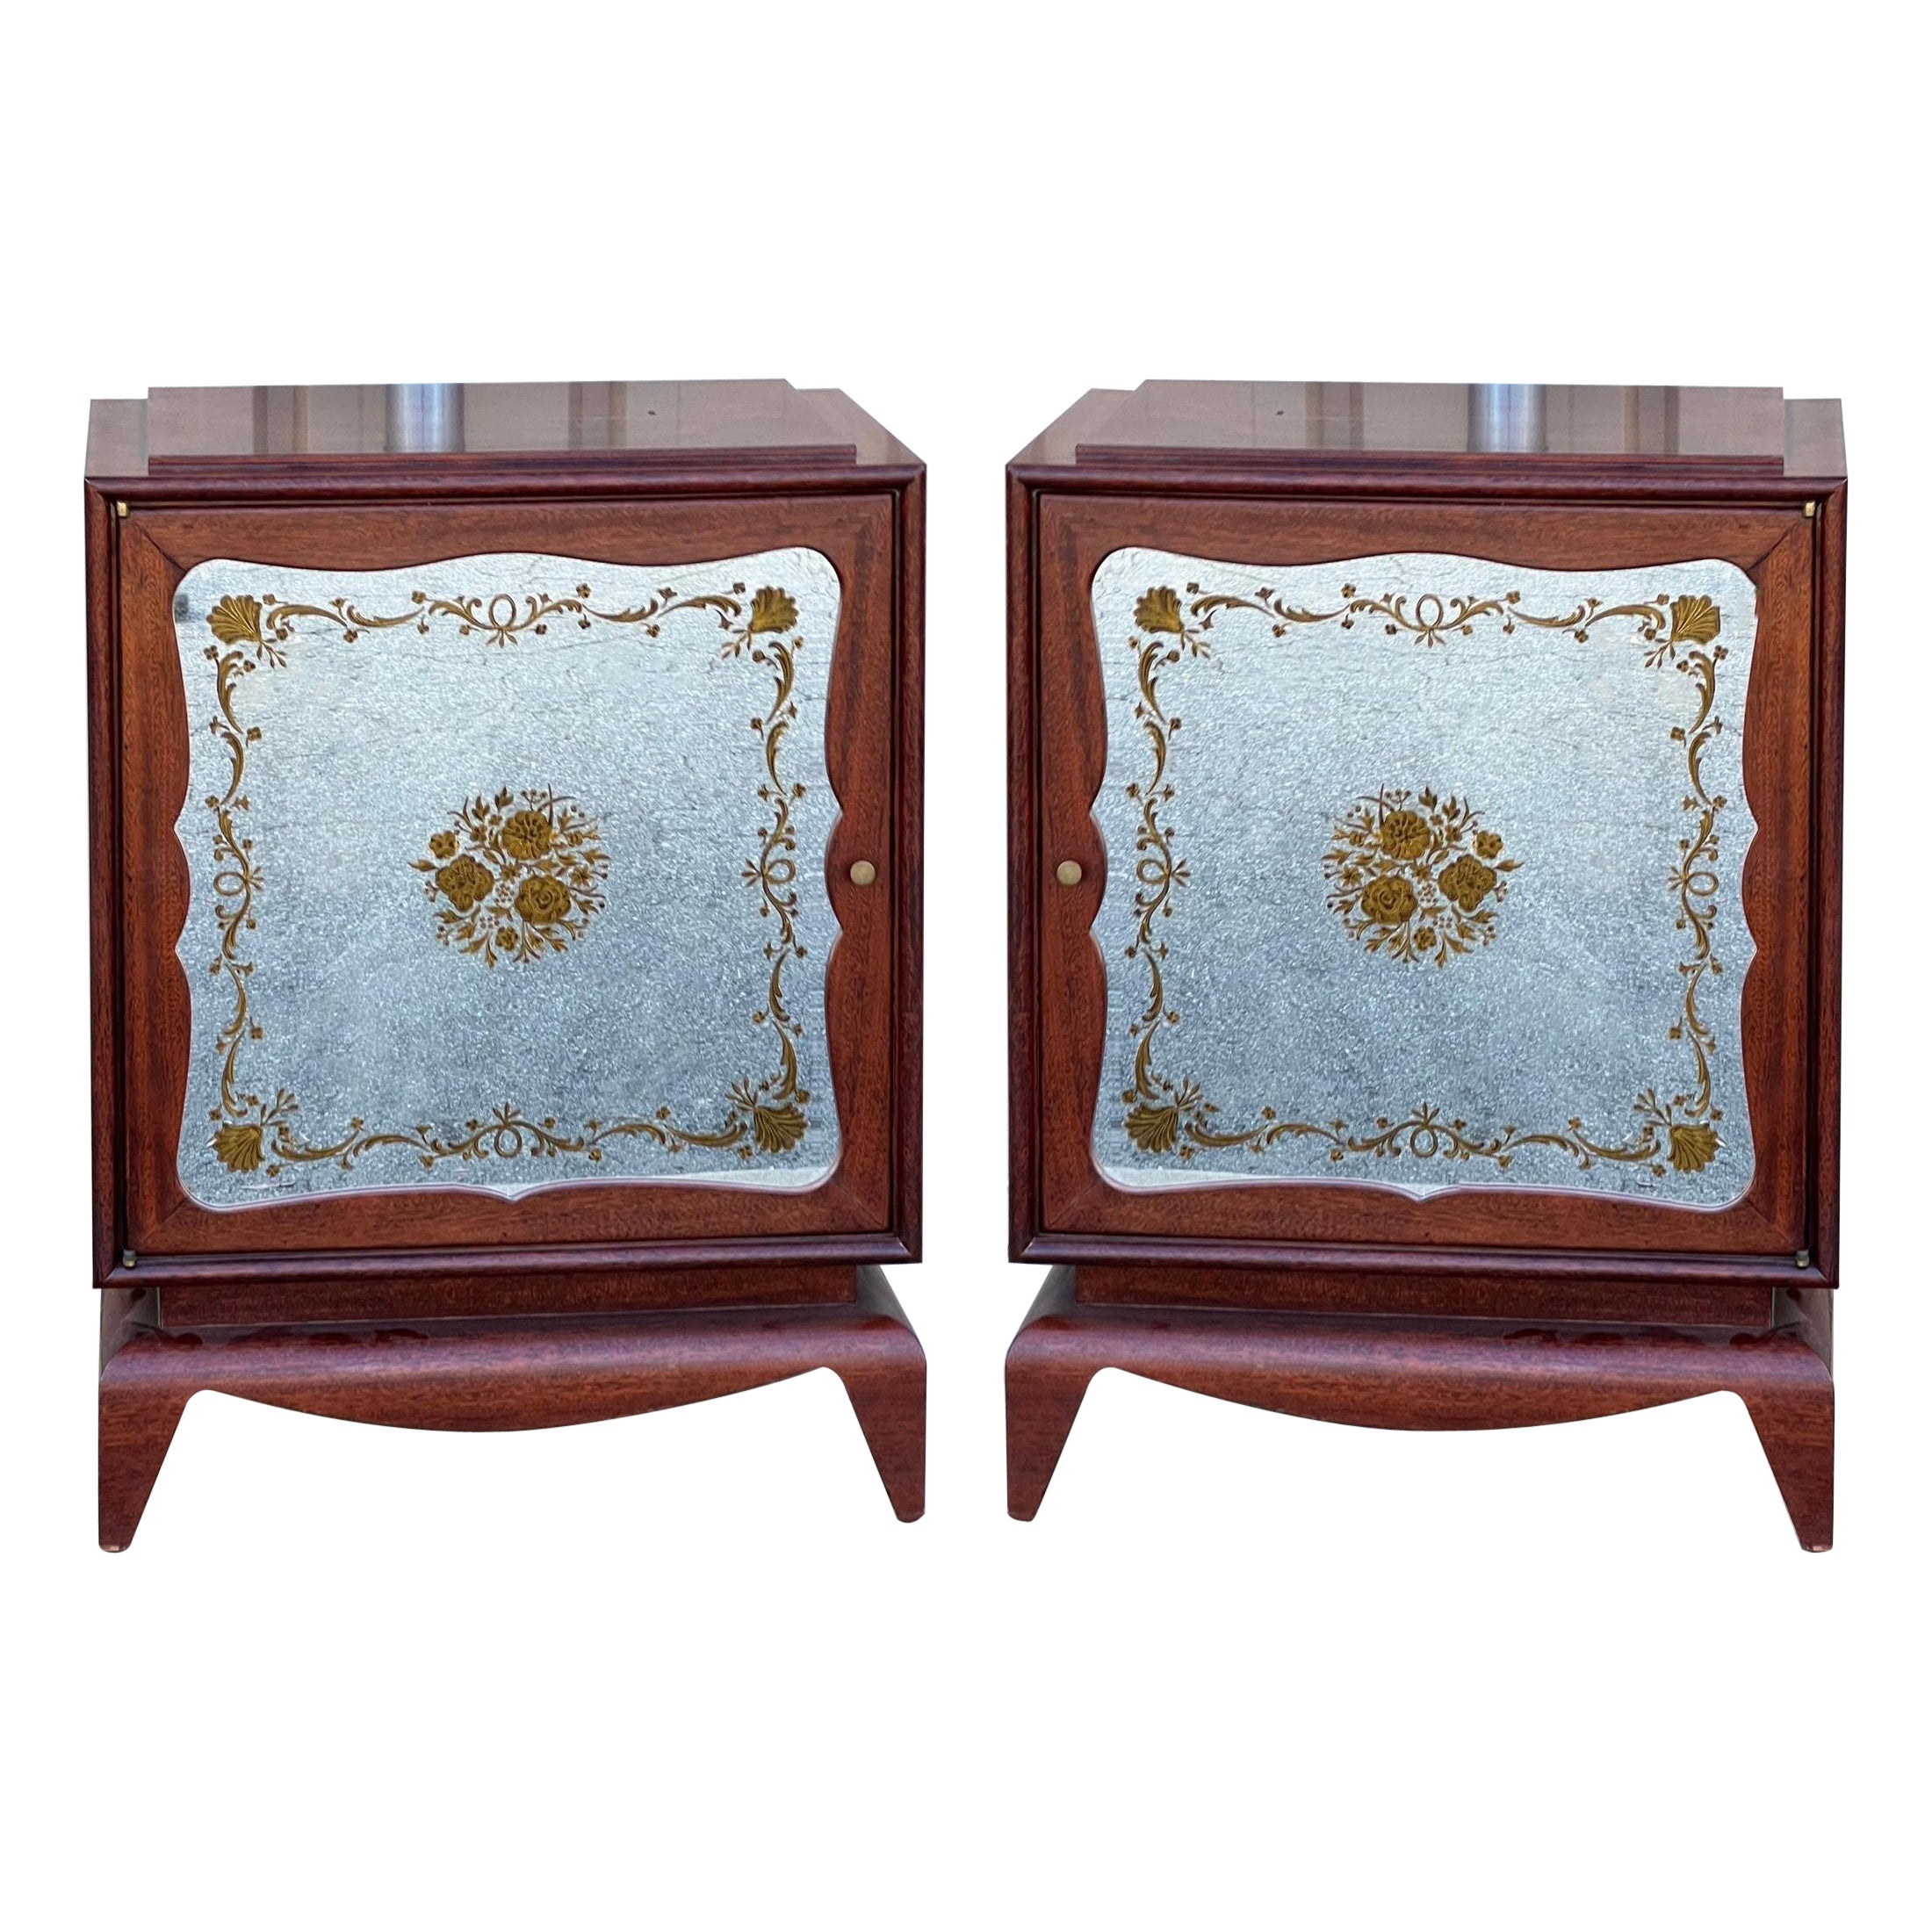 Hollywood Regency Style Mirrored Cabinets Att. Grosfeld House